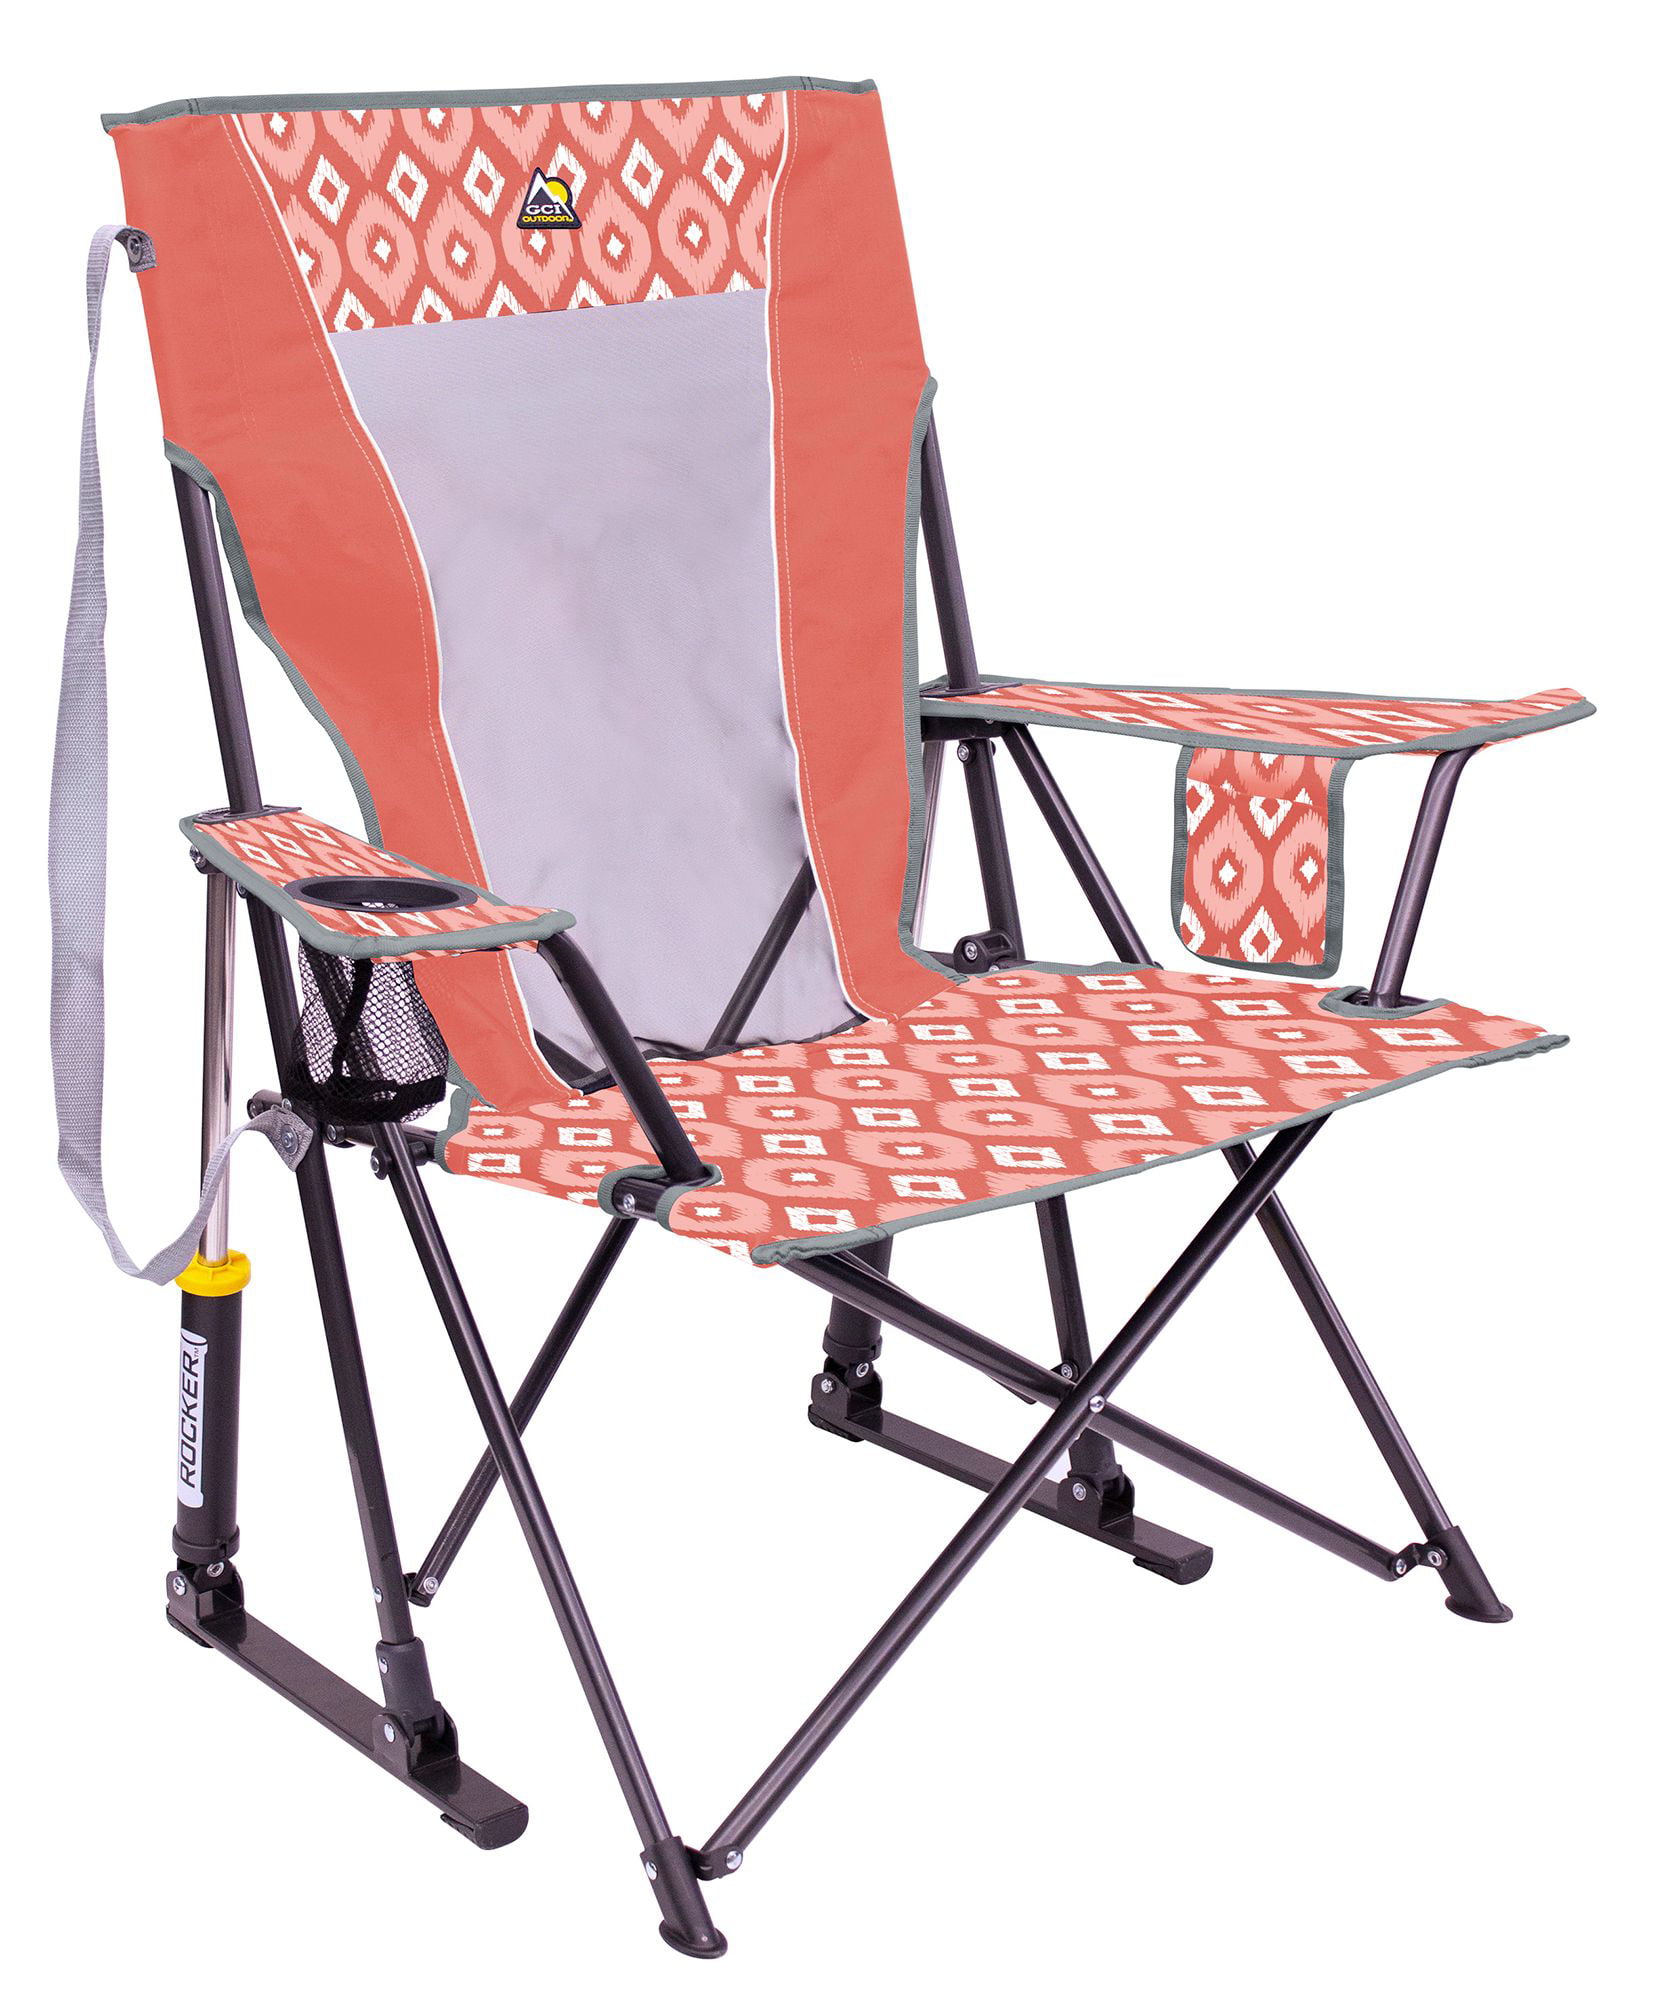 GCI Outdoor Comfort Pro Rocker Chair, Coral/Ikat - Walmart.com